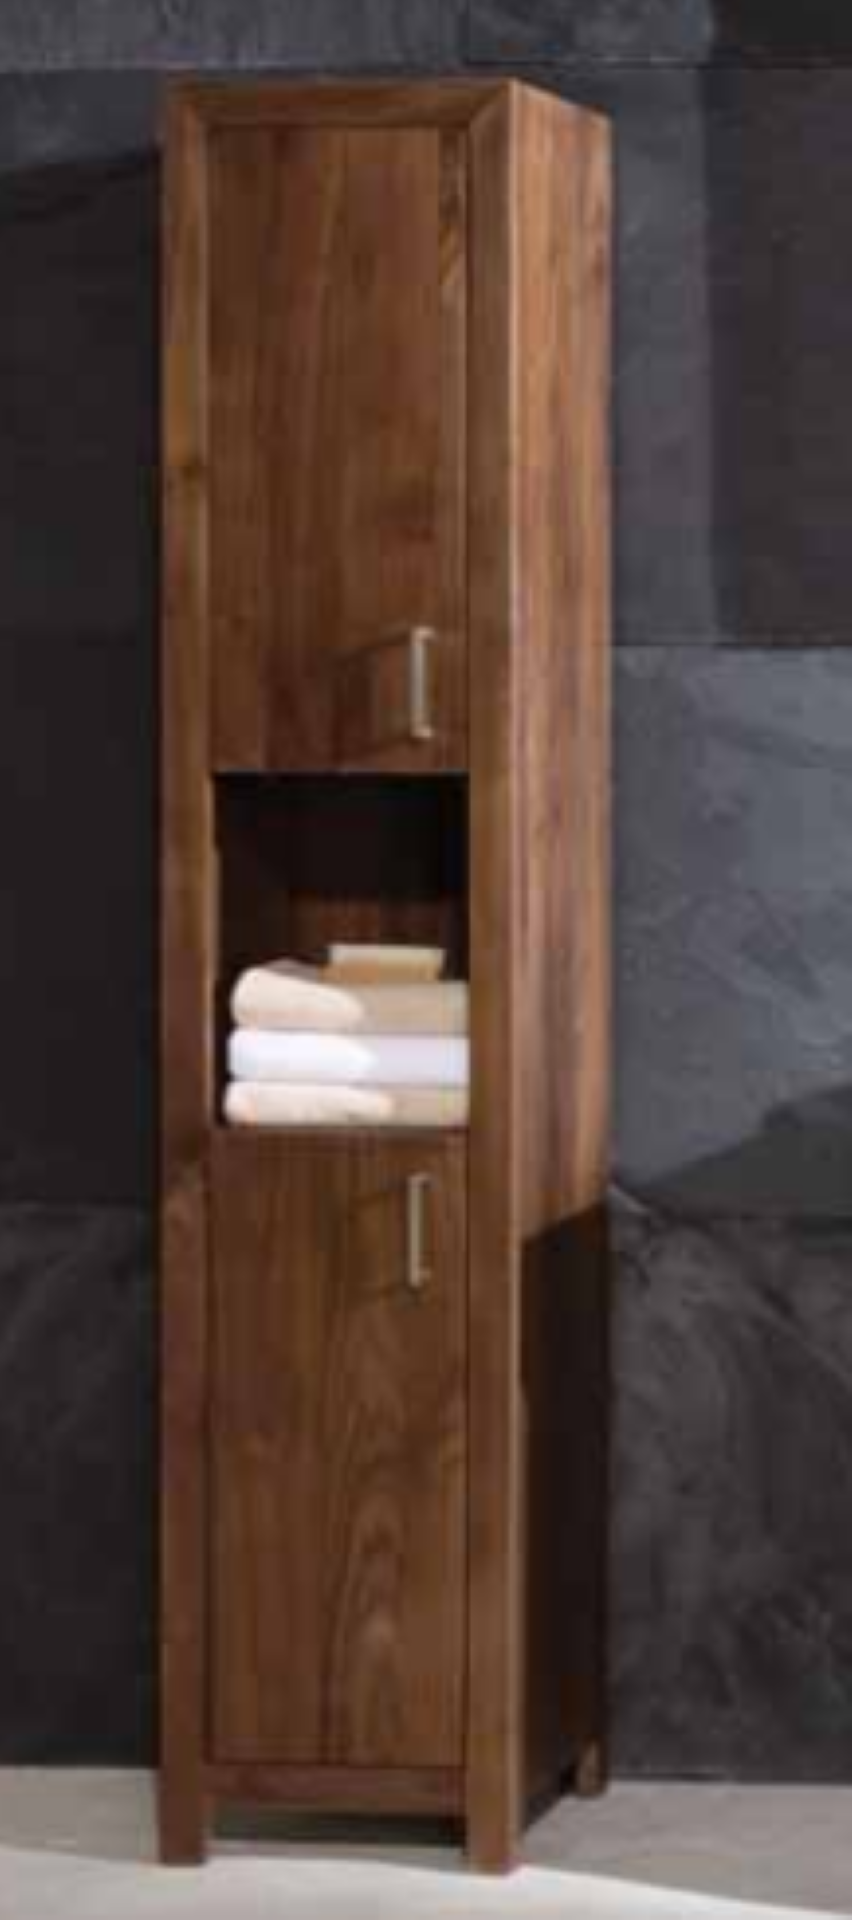 1 x Stonearth Freestanding Tallboy Bathroom Storage Cabinet - American Solid Walnut - RRP £996! - Image 7 of 14